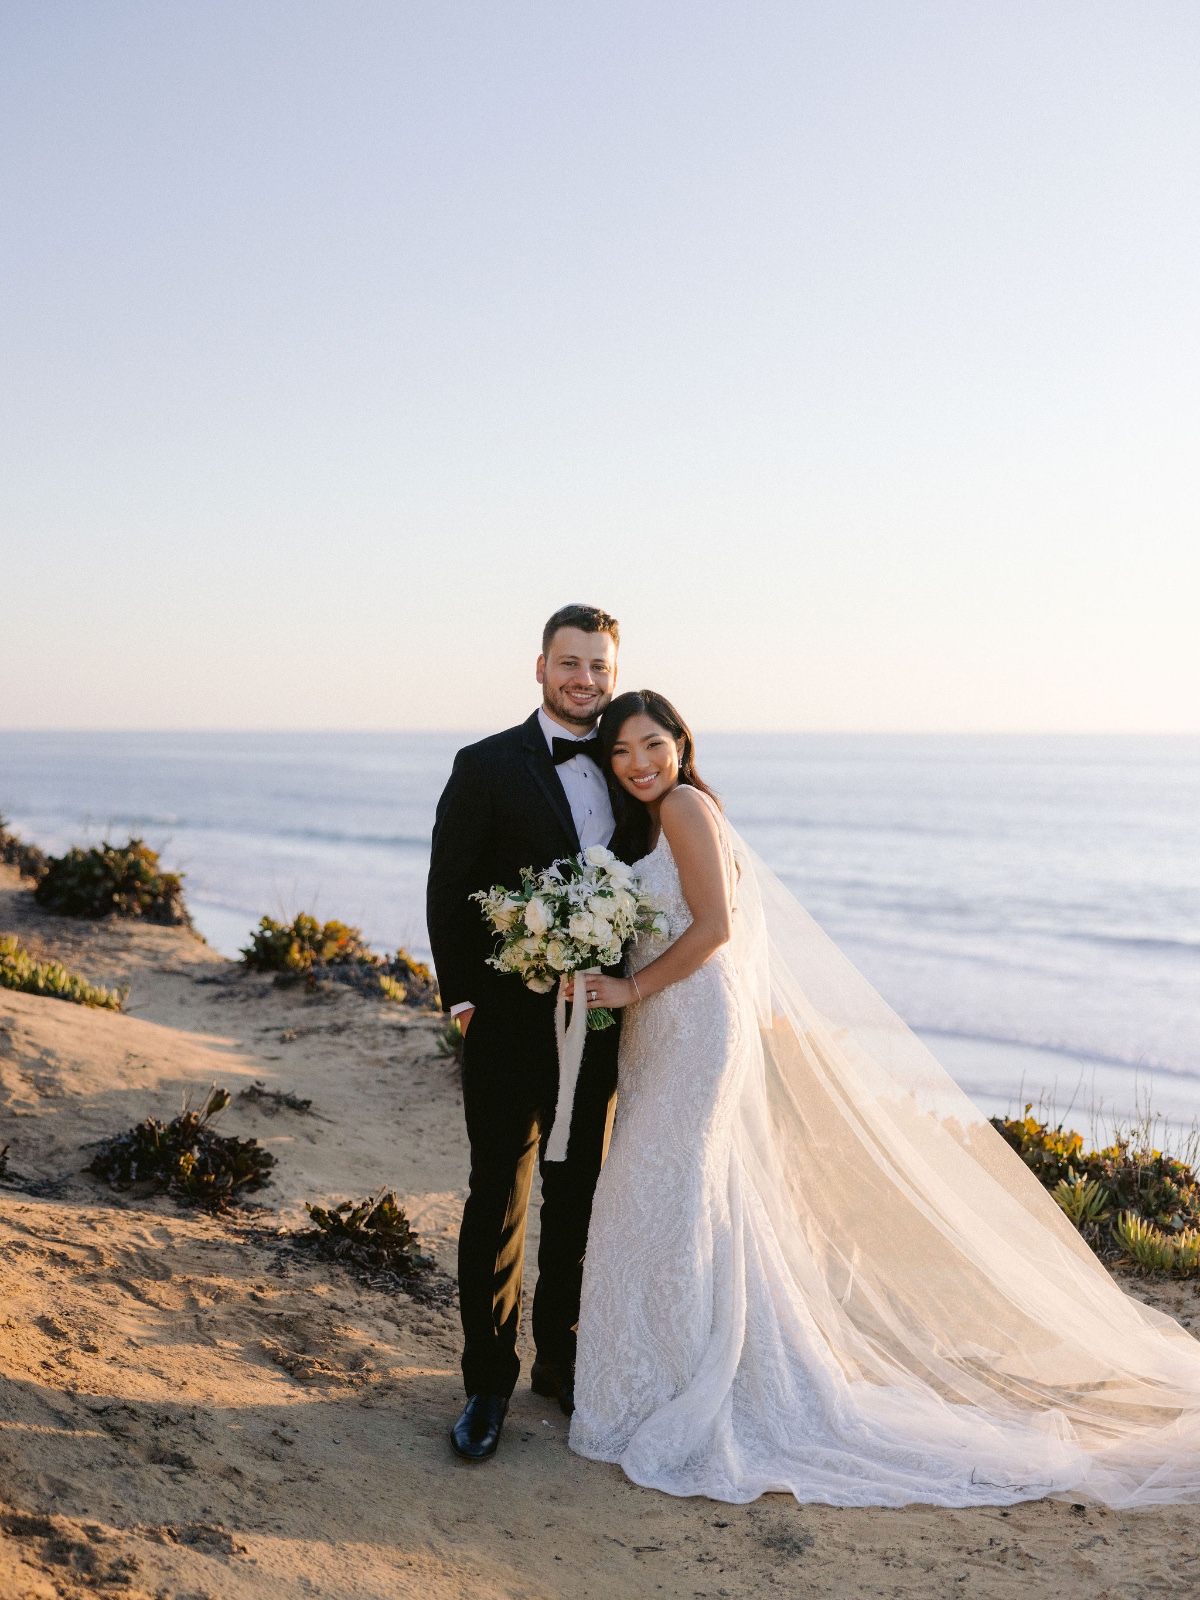 Sunset ocean portraits with bride & groom